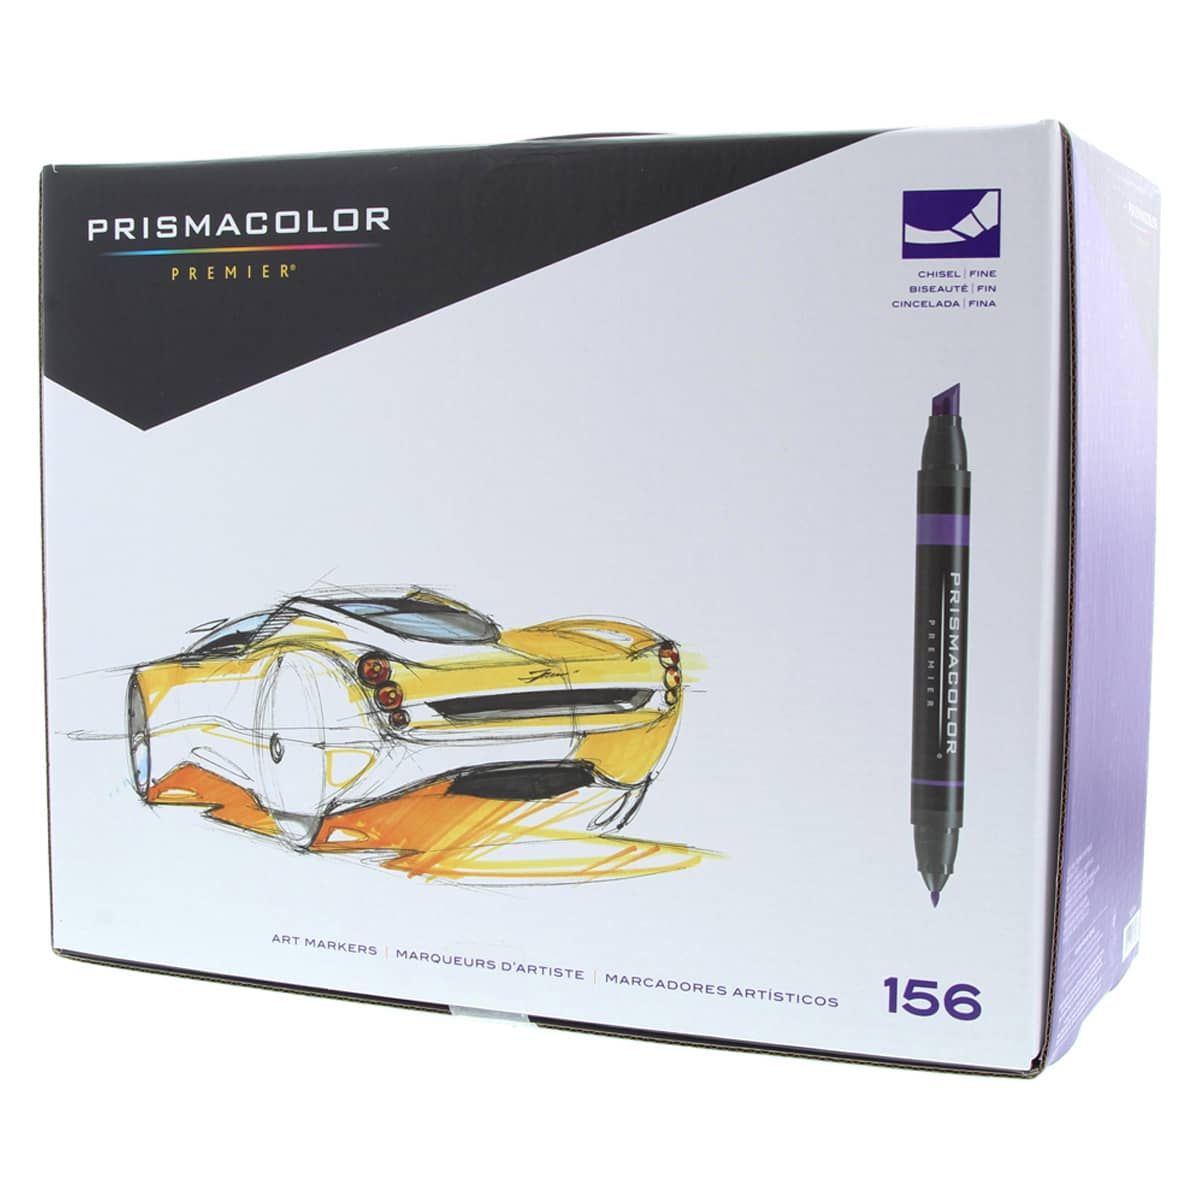 Prismacolor Premier Double-Ended Chisel Tip Markers and Sets